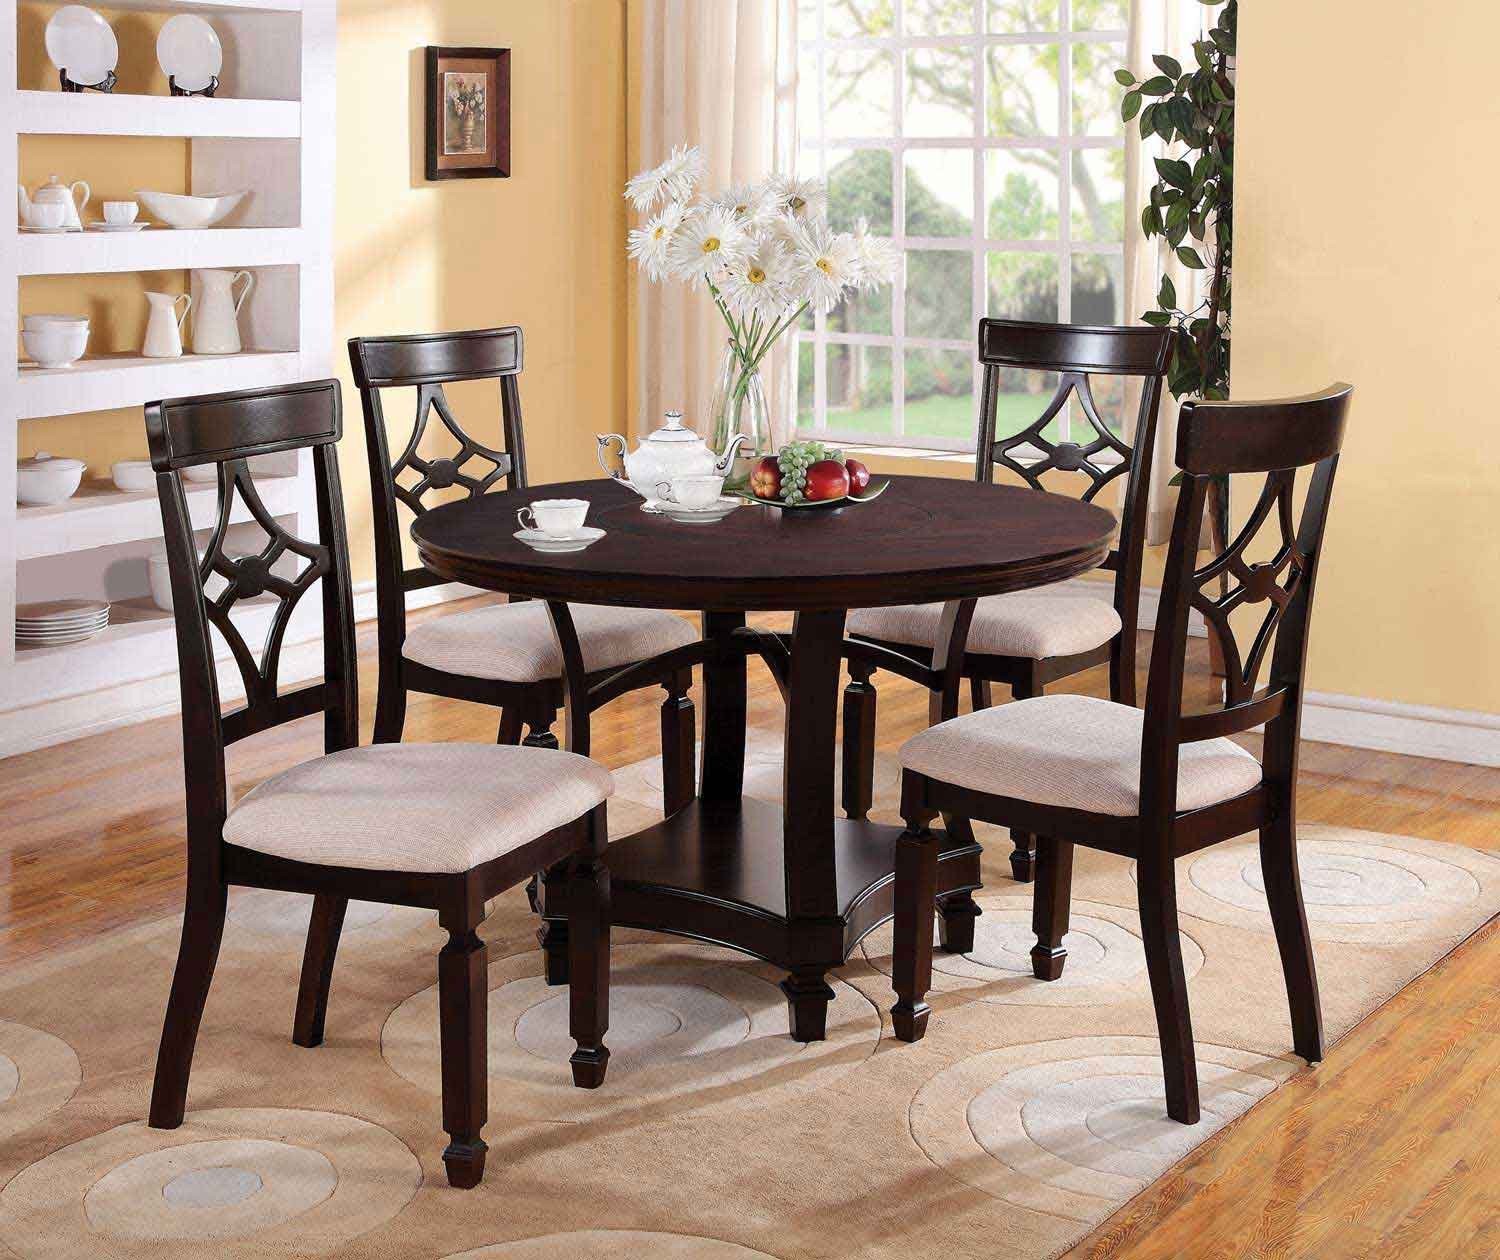 Кухонный стол стулья круглый. Стол Alto Cappuccino. Стол кухонный. Столы и стулья для кухни. Обеденный стол и стулья.